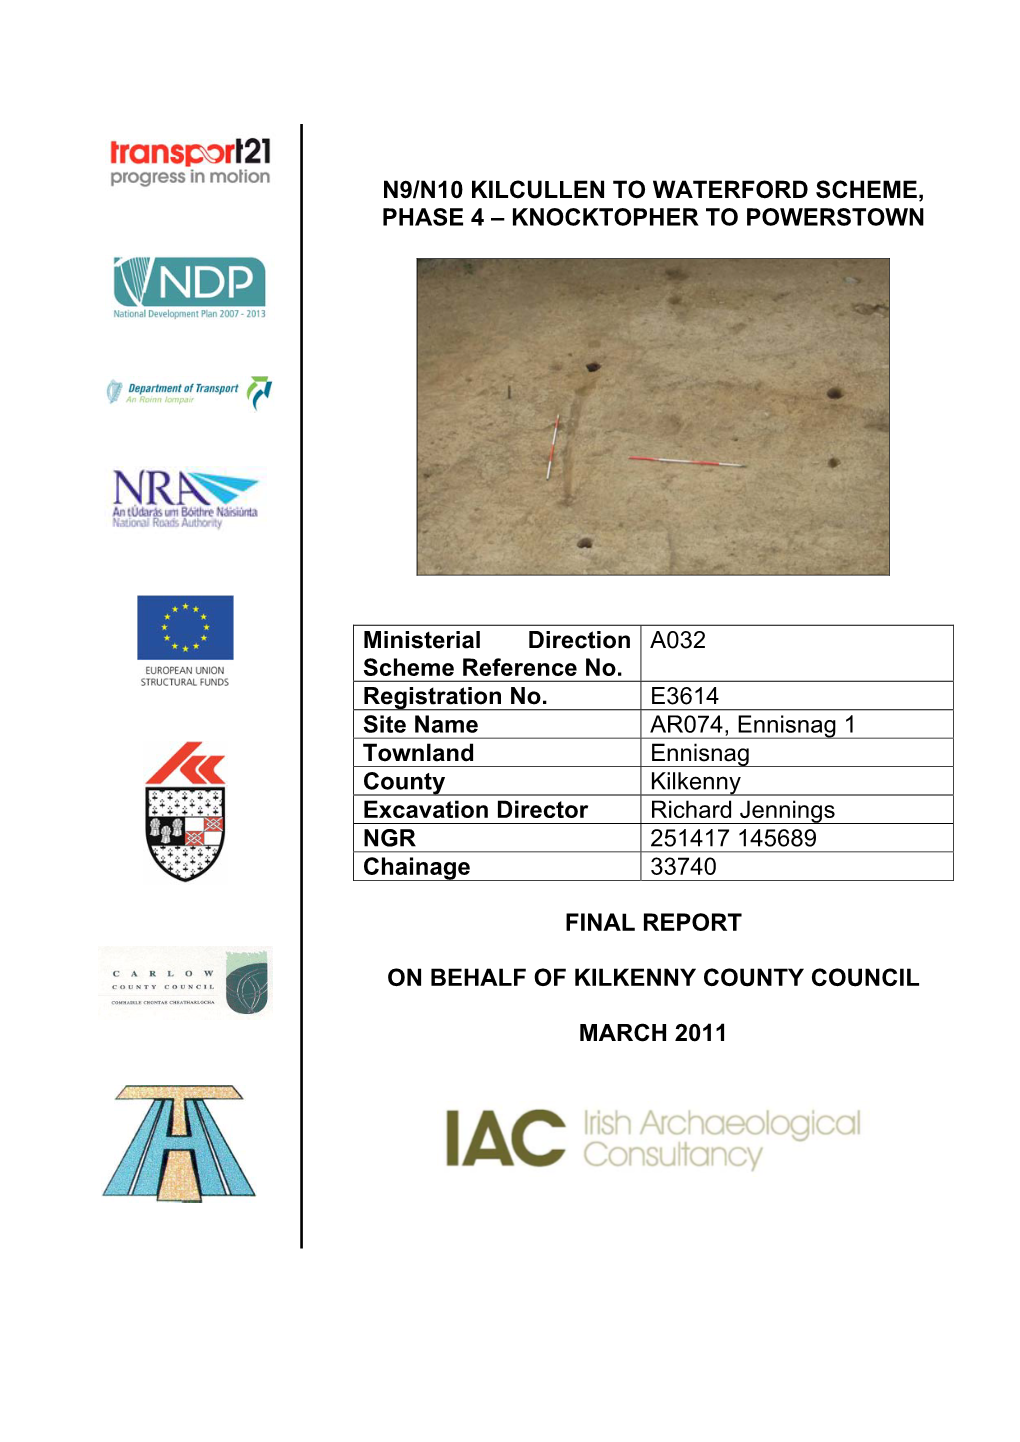 N9/N10 Kilcullen to Waterford Scheme, Phase 4 – Knocktopher to Powerstown (Figure 1)